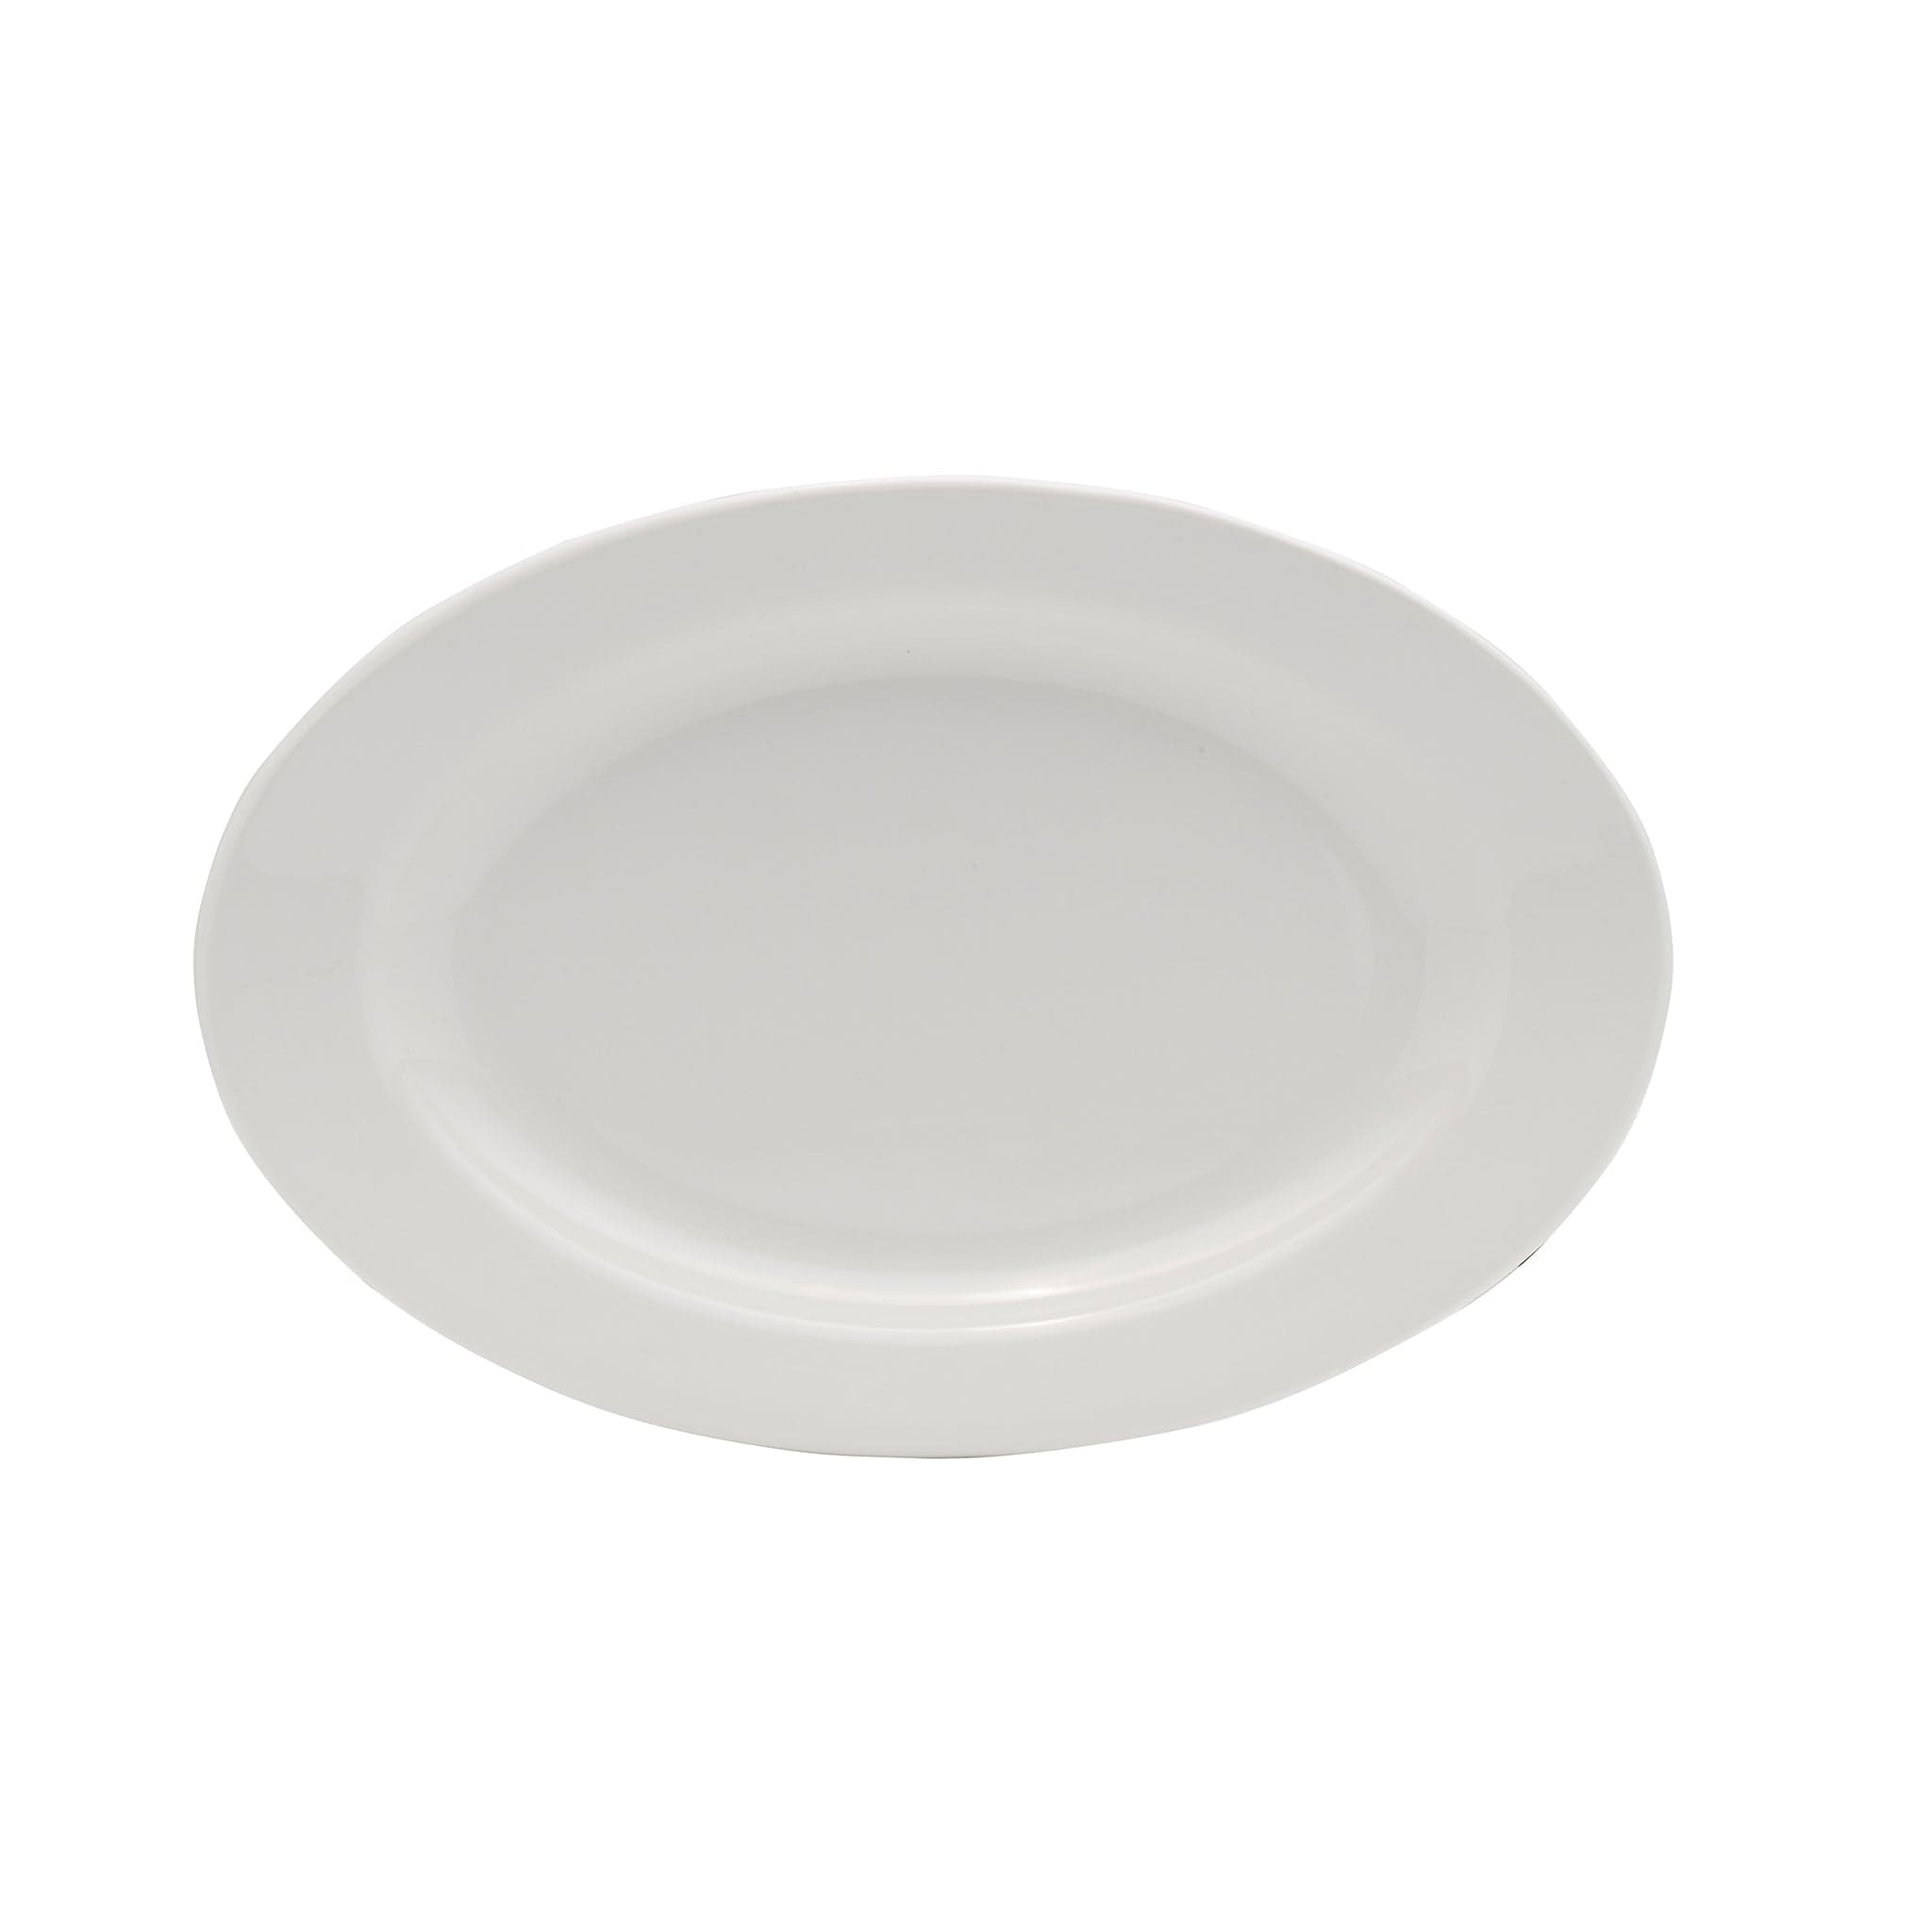 Saratoga Porcelain Oval Platter 11x7" White